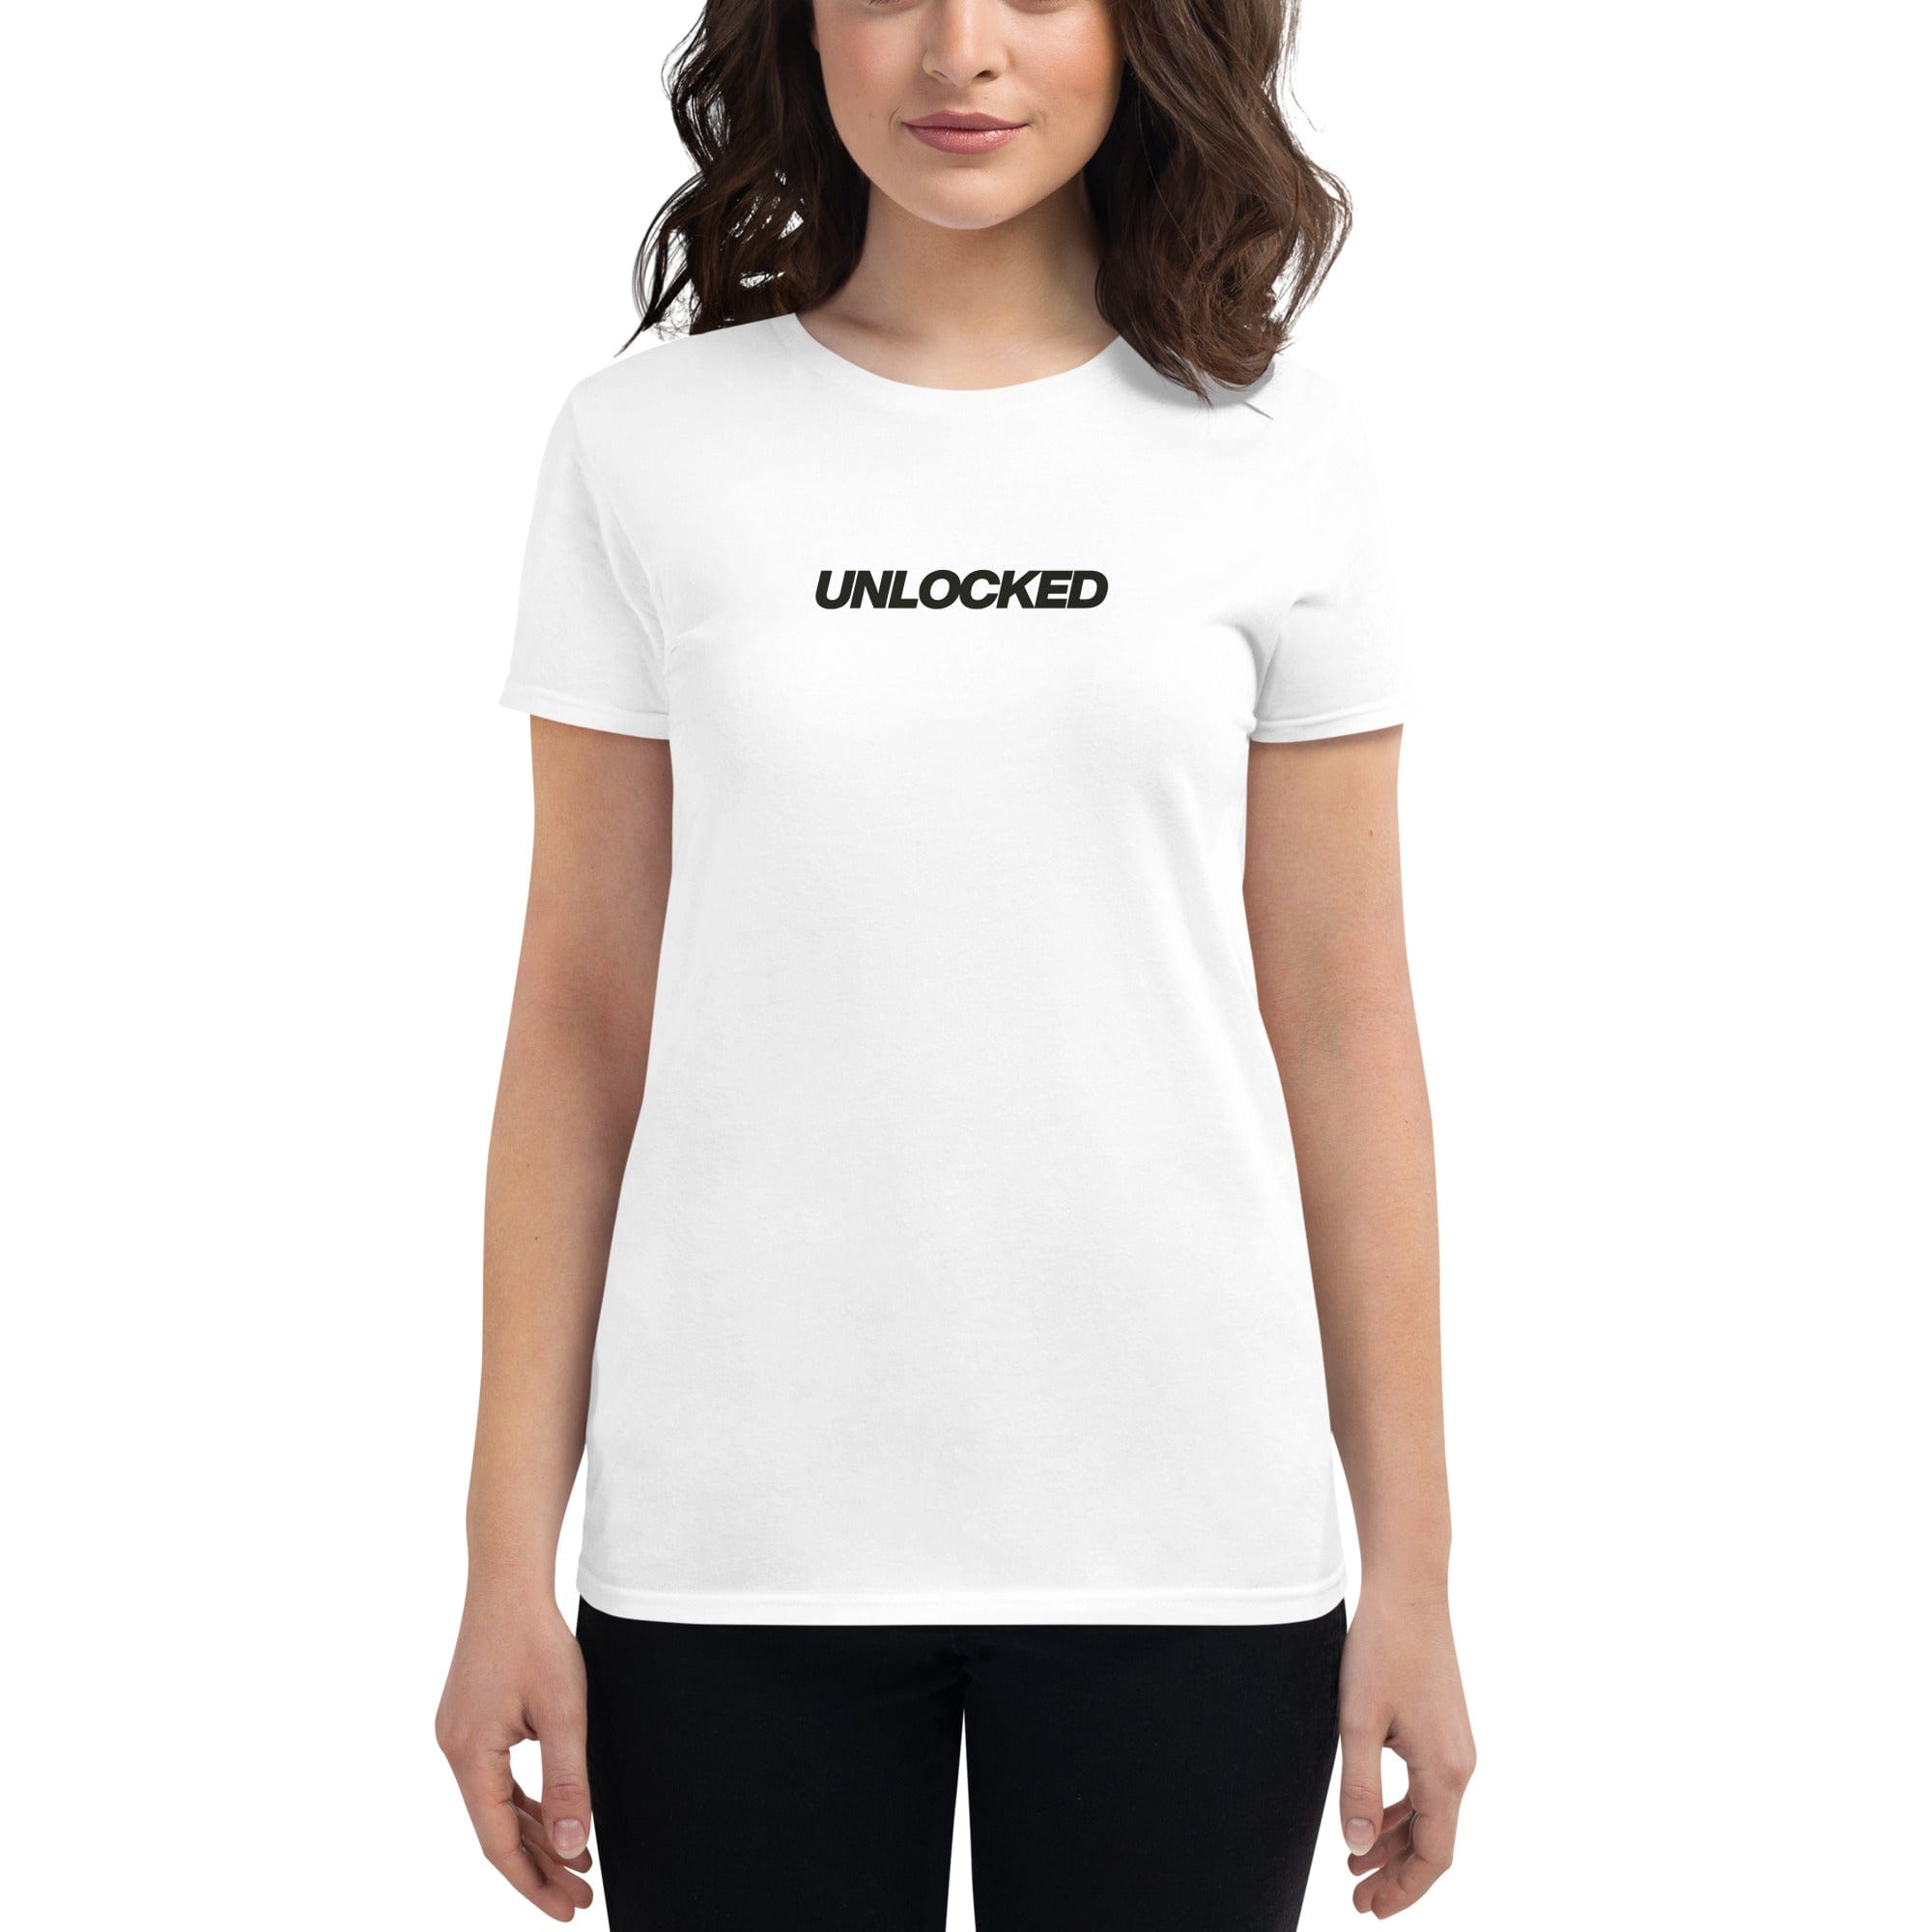 Unlocked Women's Short-Sleeve T-shirt White / S Shirts & Tops Jolly & Goode